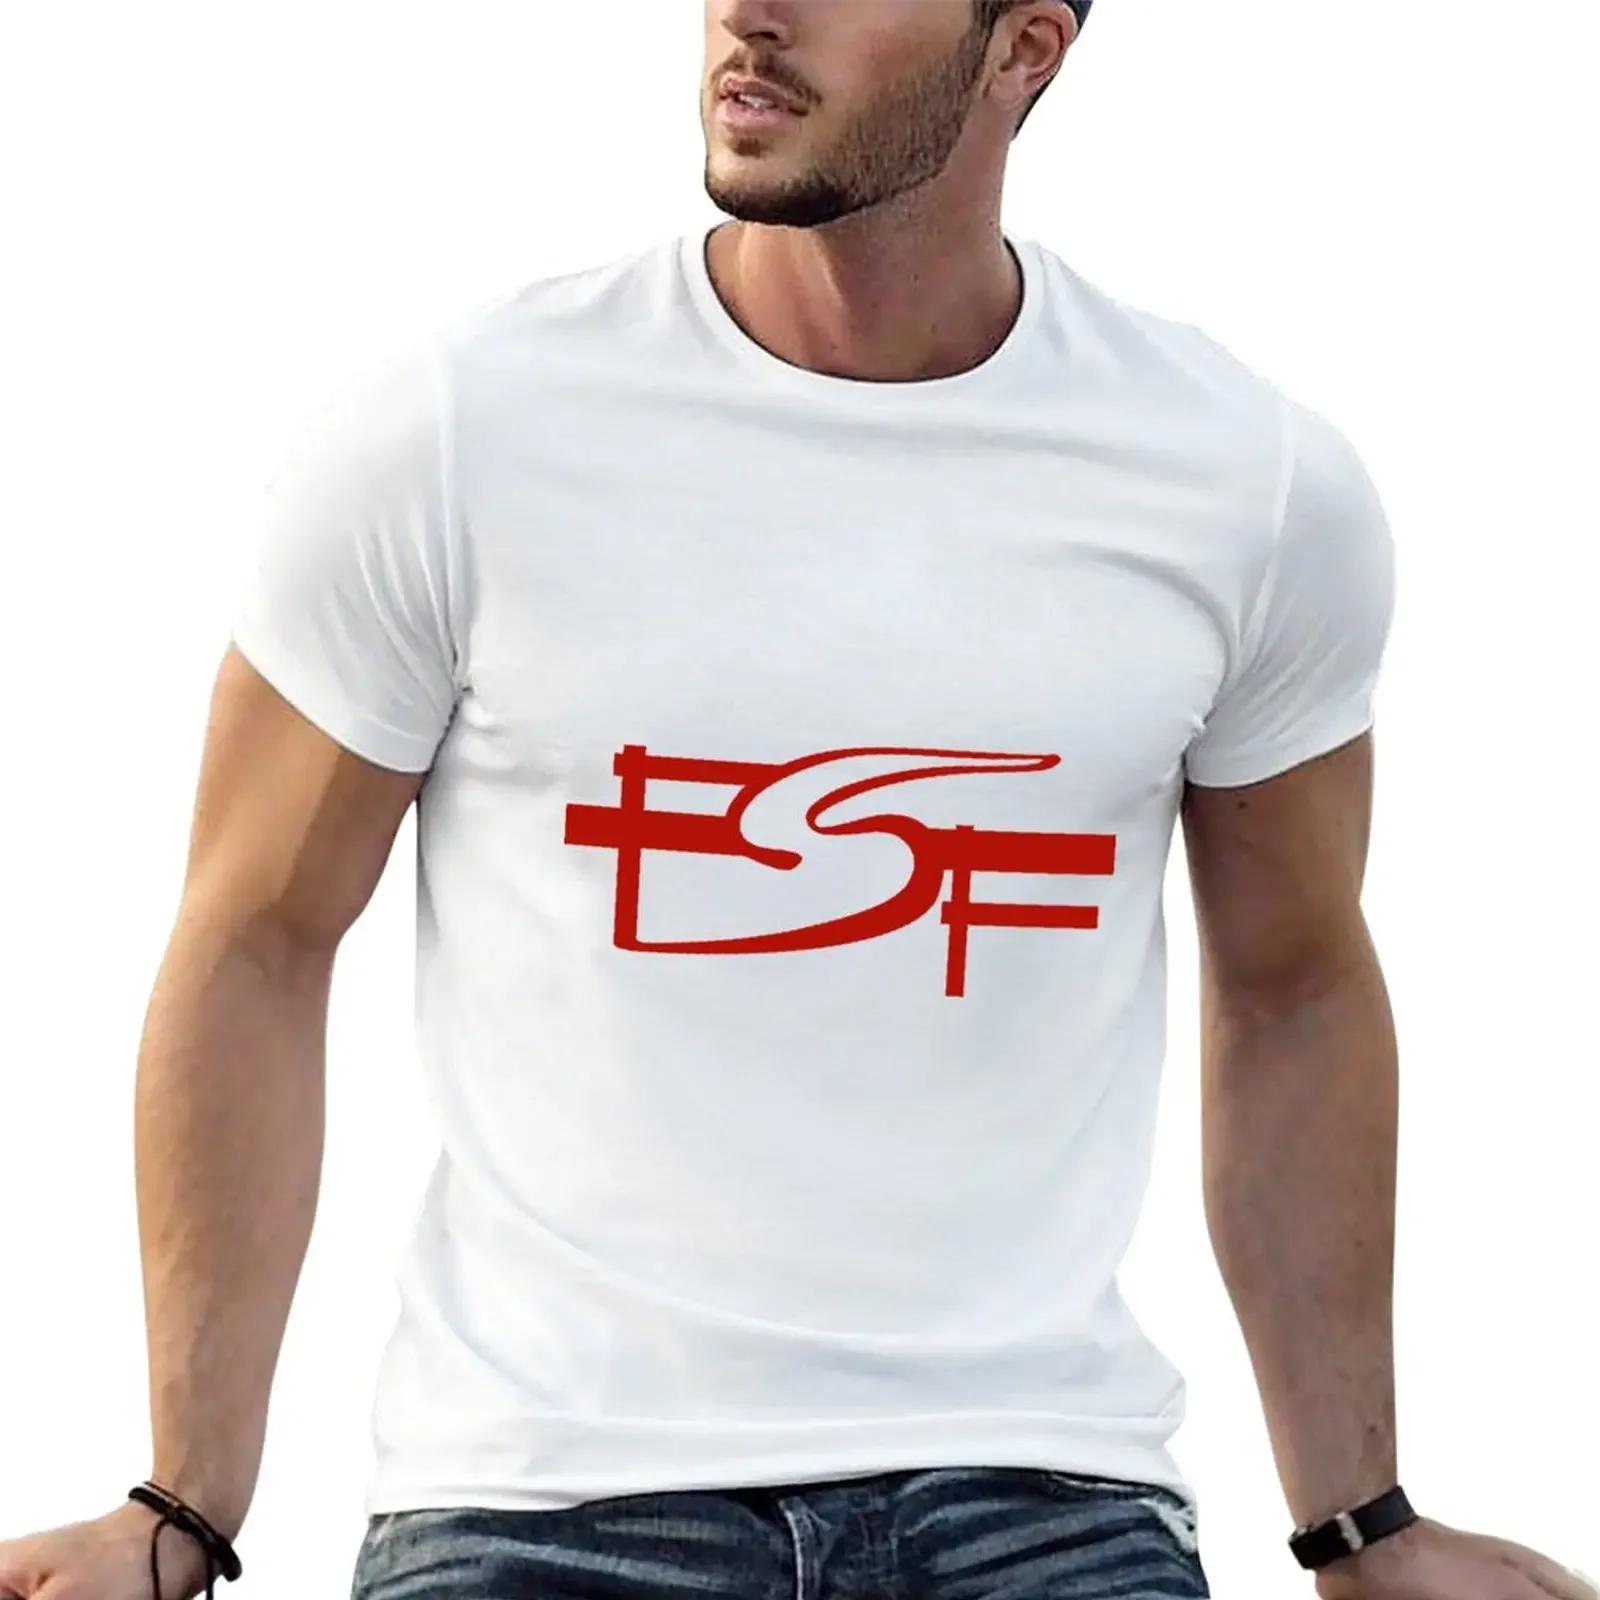 

FSF - Free Software Foundation wordart T-Shirt animal prinfor boys summer top mens graphic t-shirts hip hop